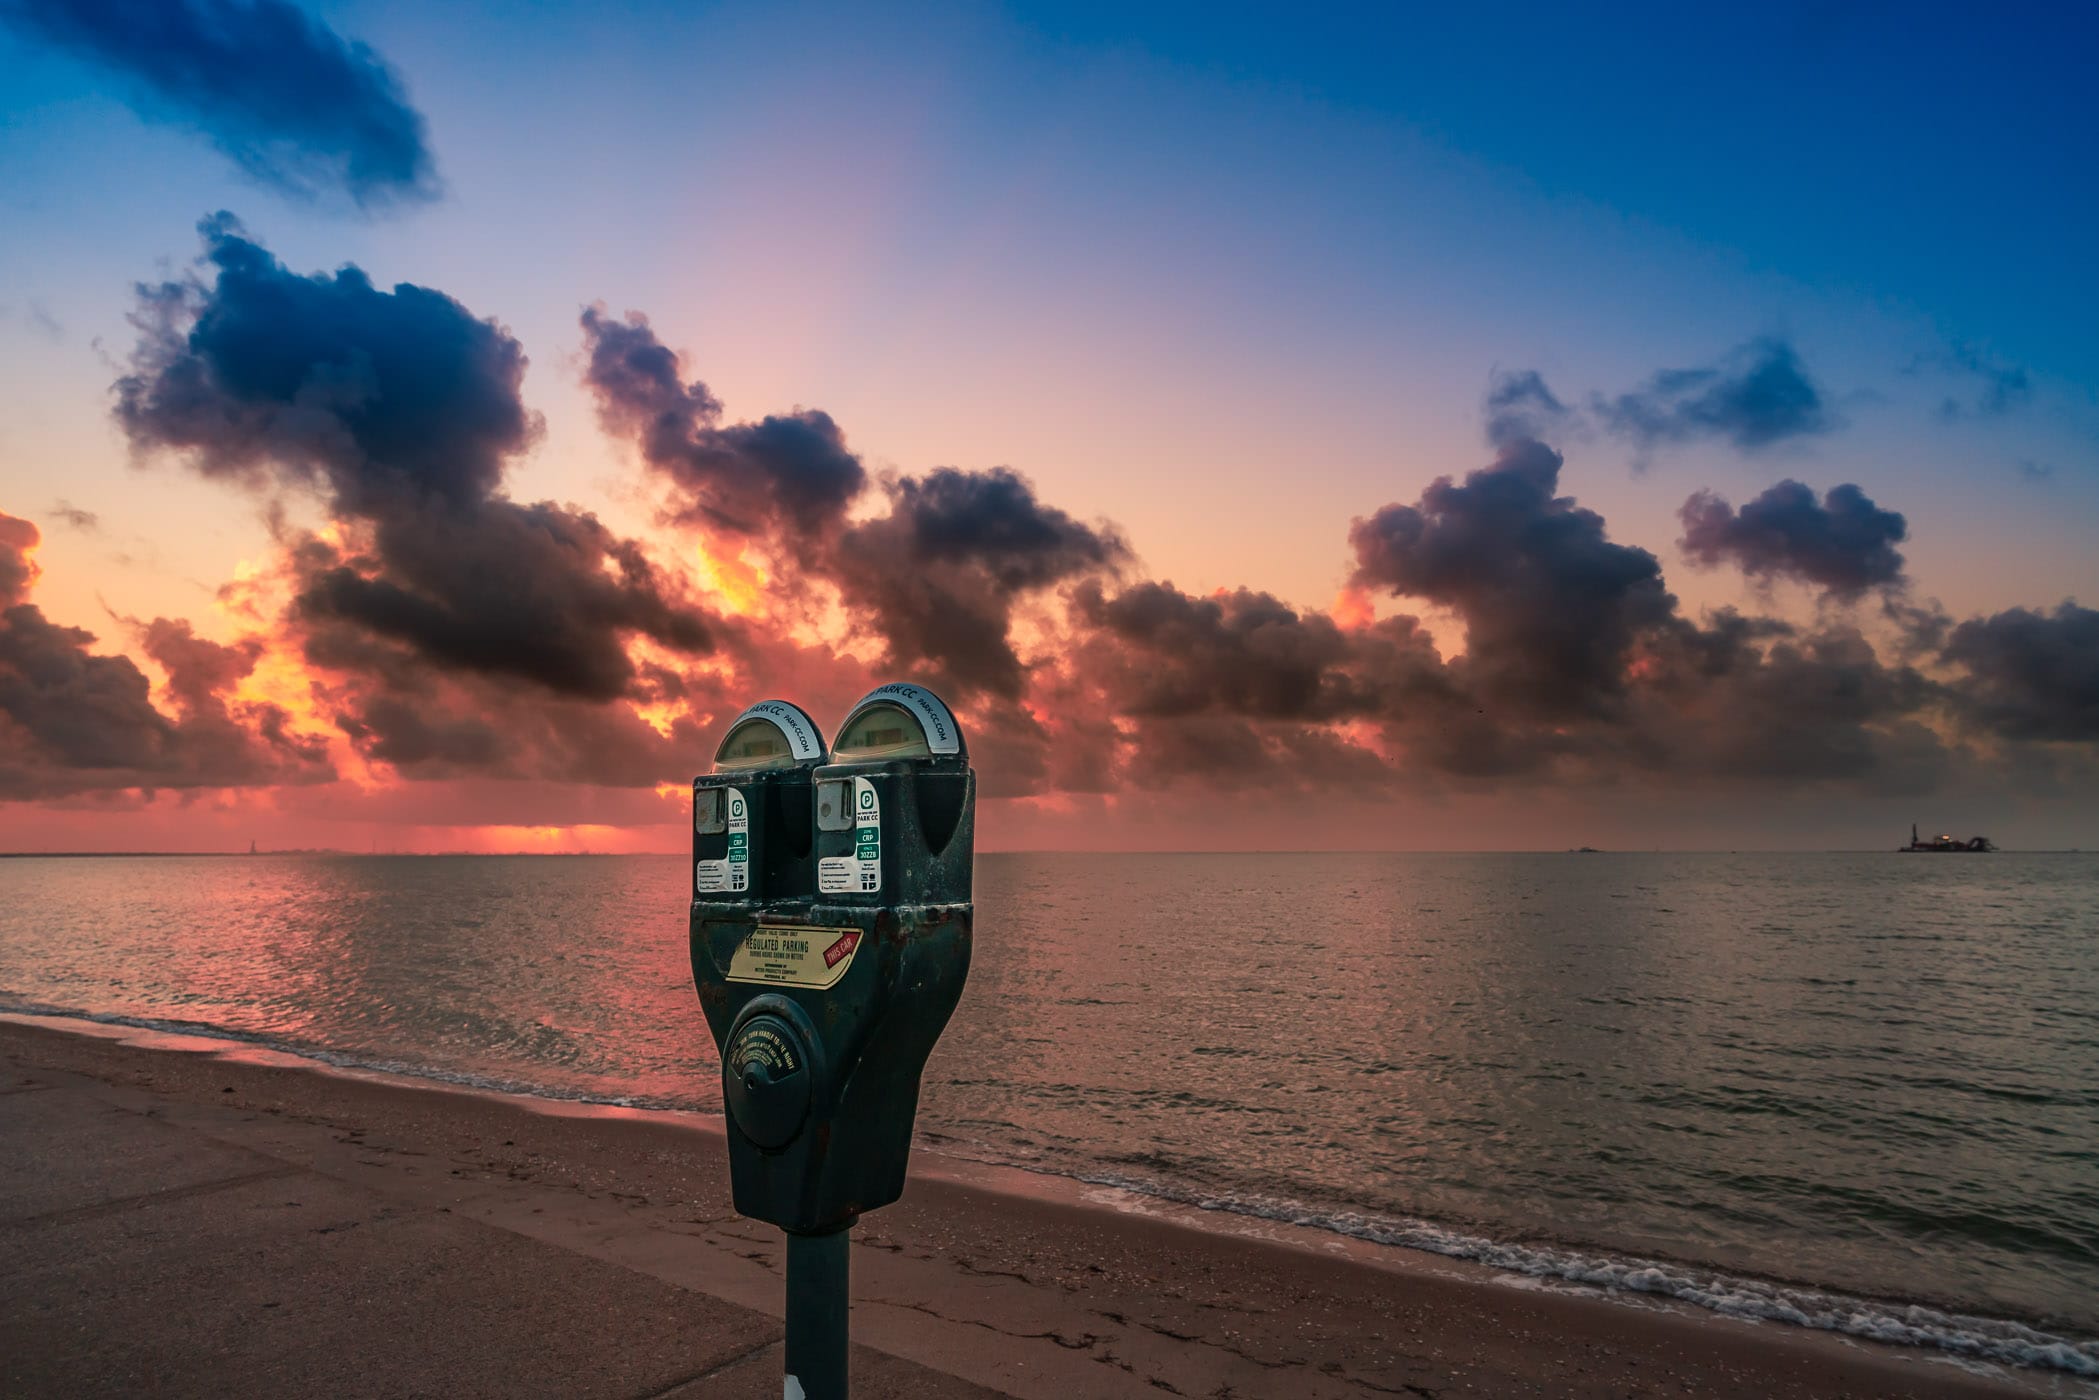 Parking meters greet the morning sun at North Beach, Corpus Christi, Texas.